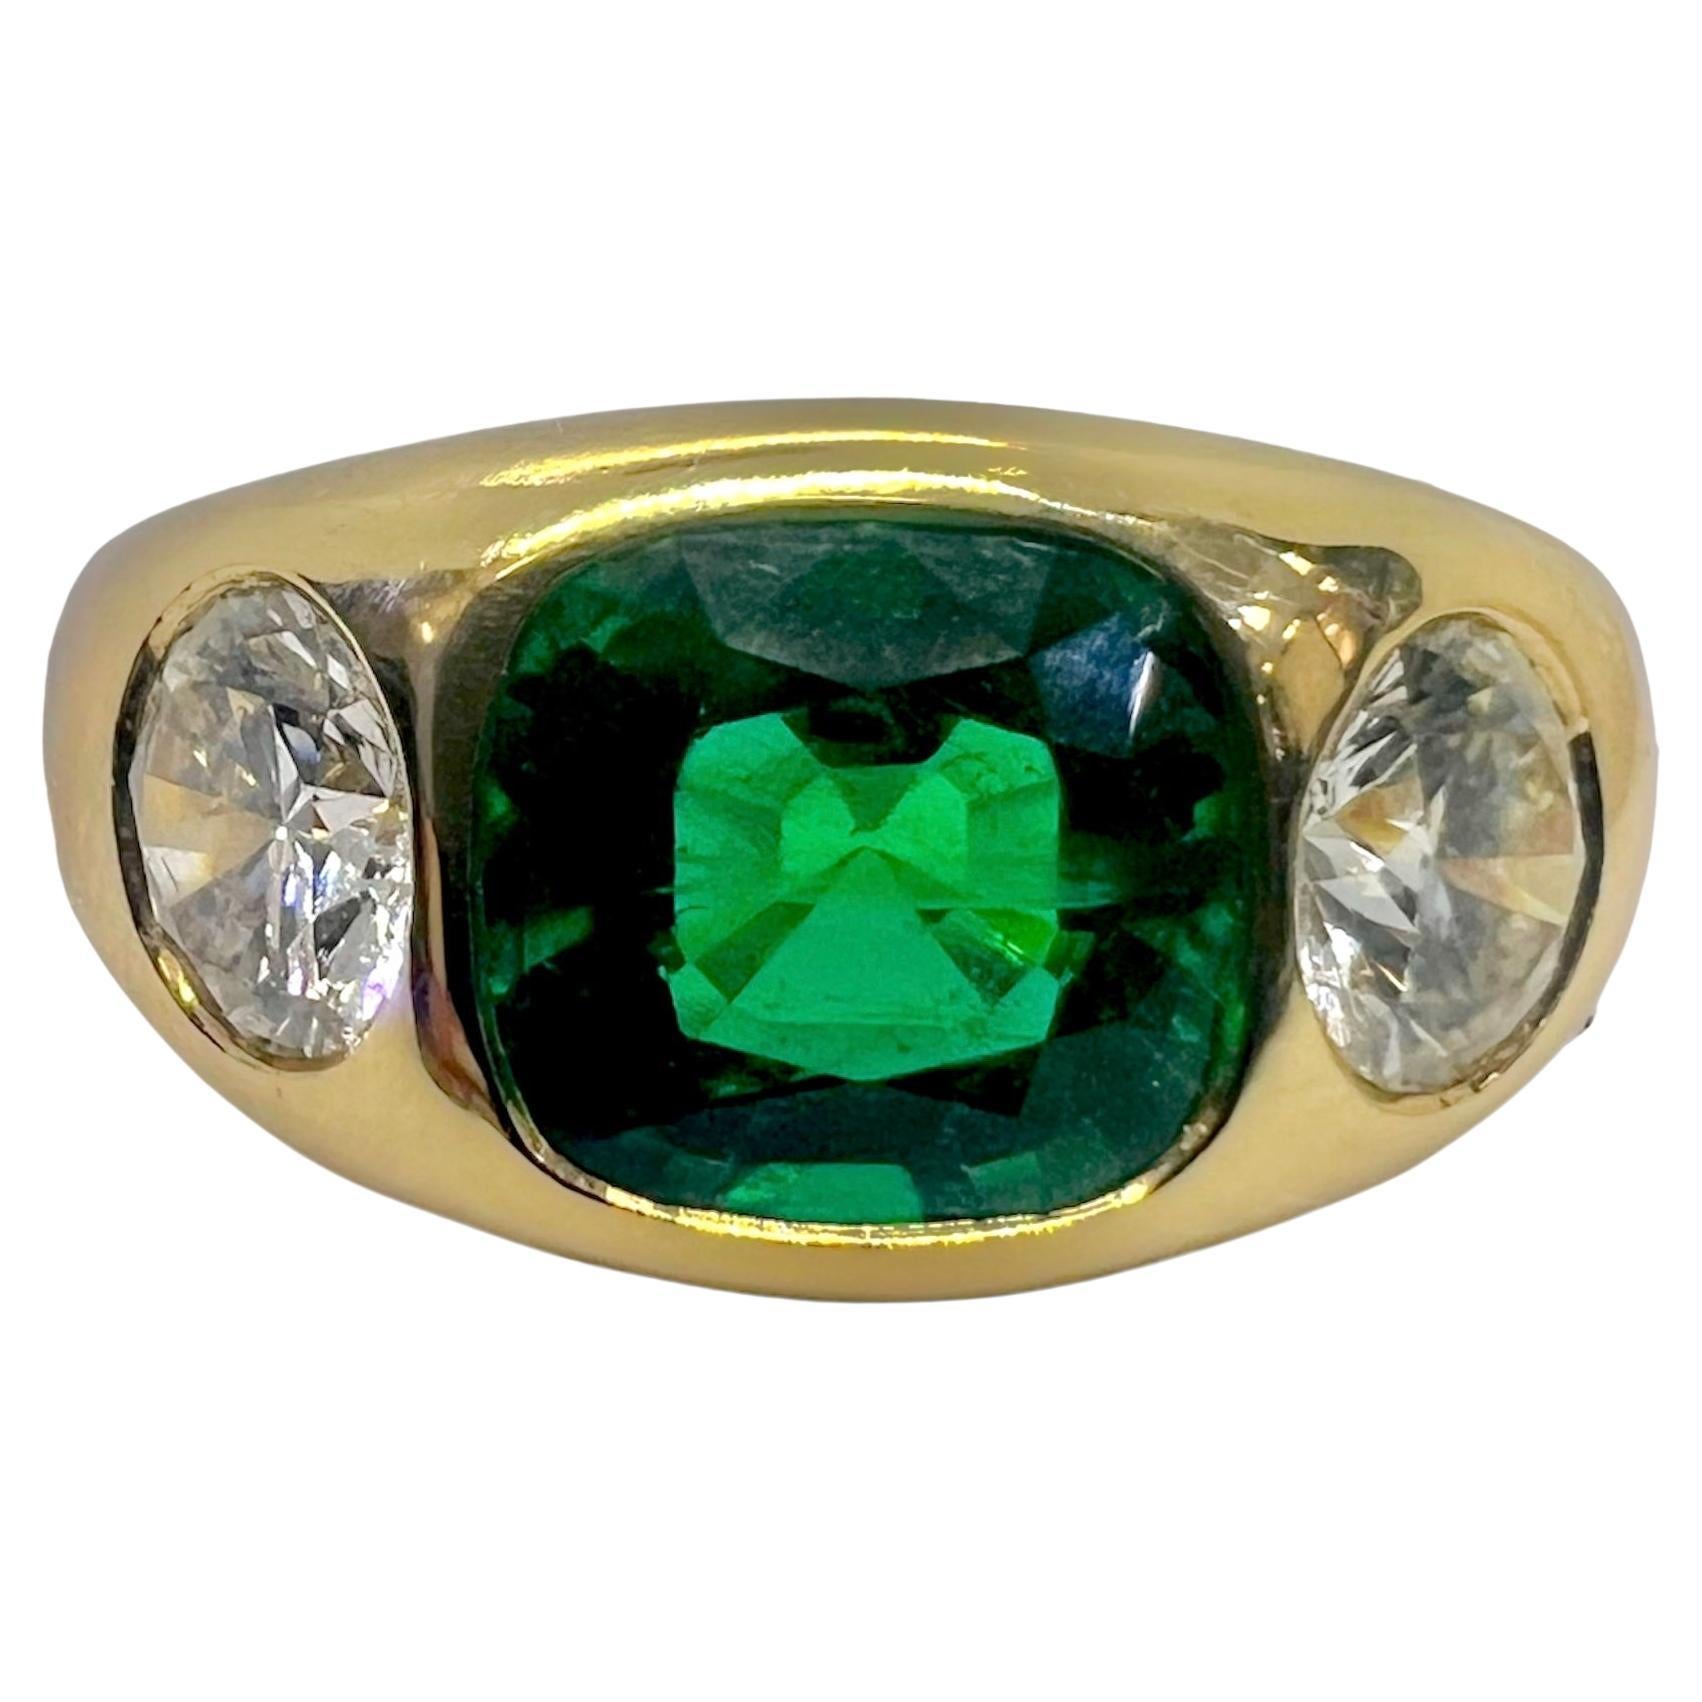 Sophia D. Emerald and Diamond Ring in 18K Yellow Gold